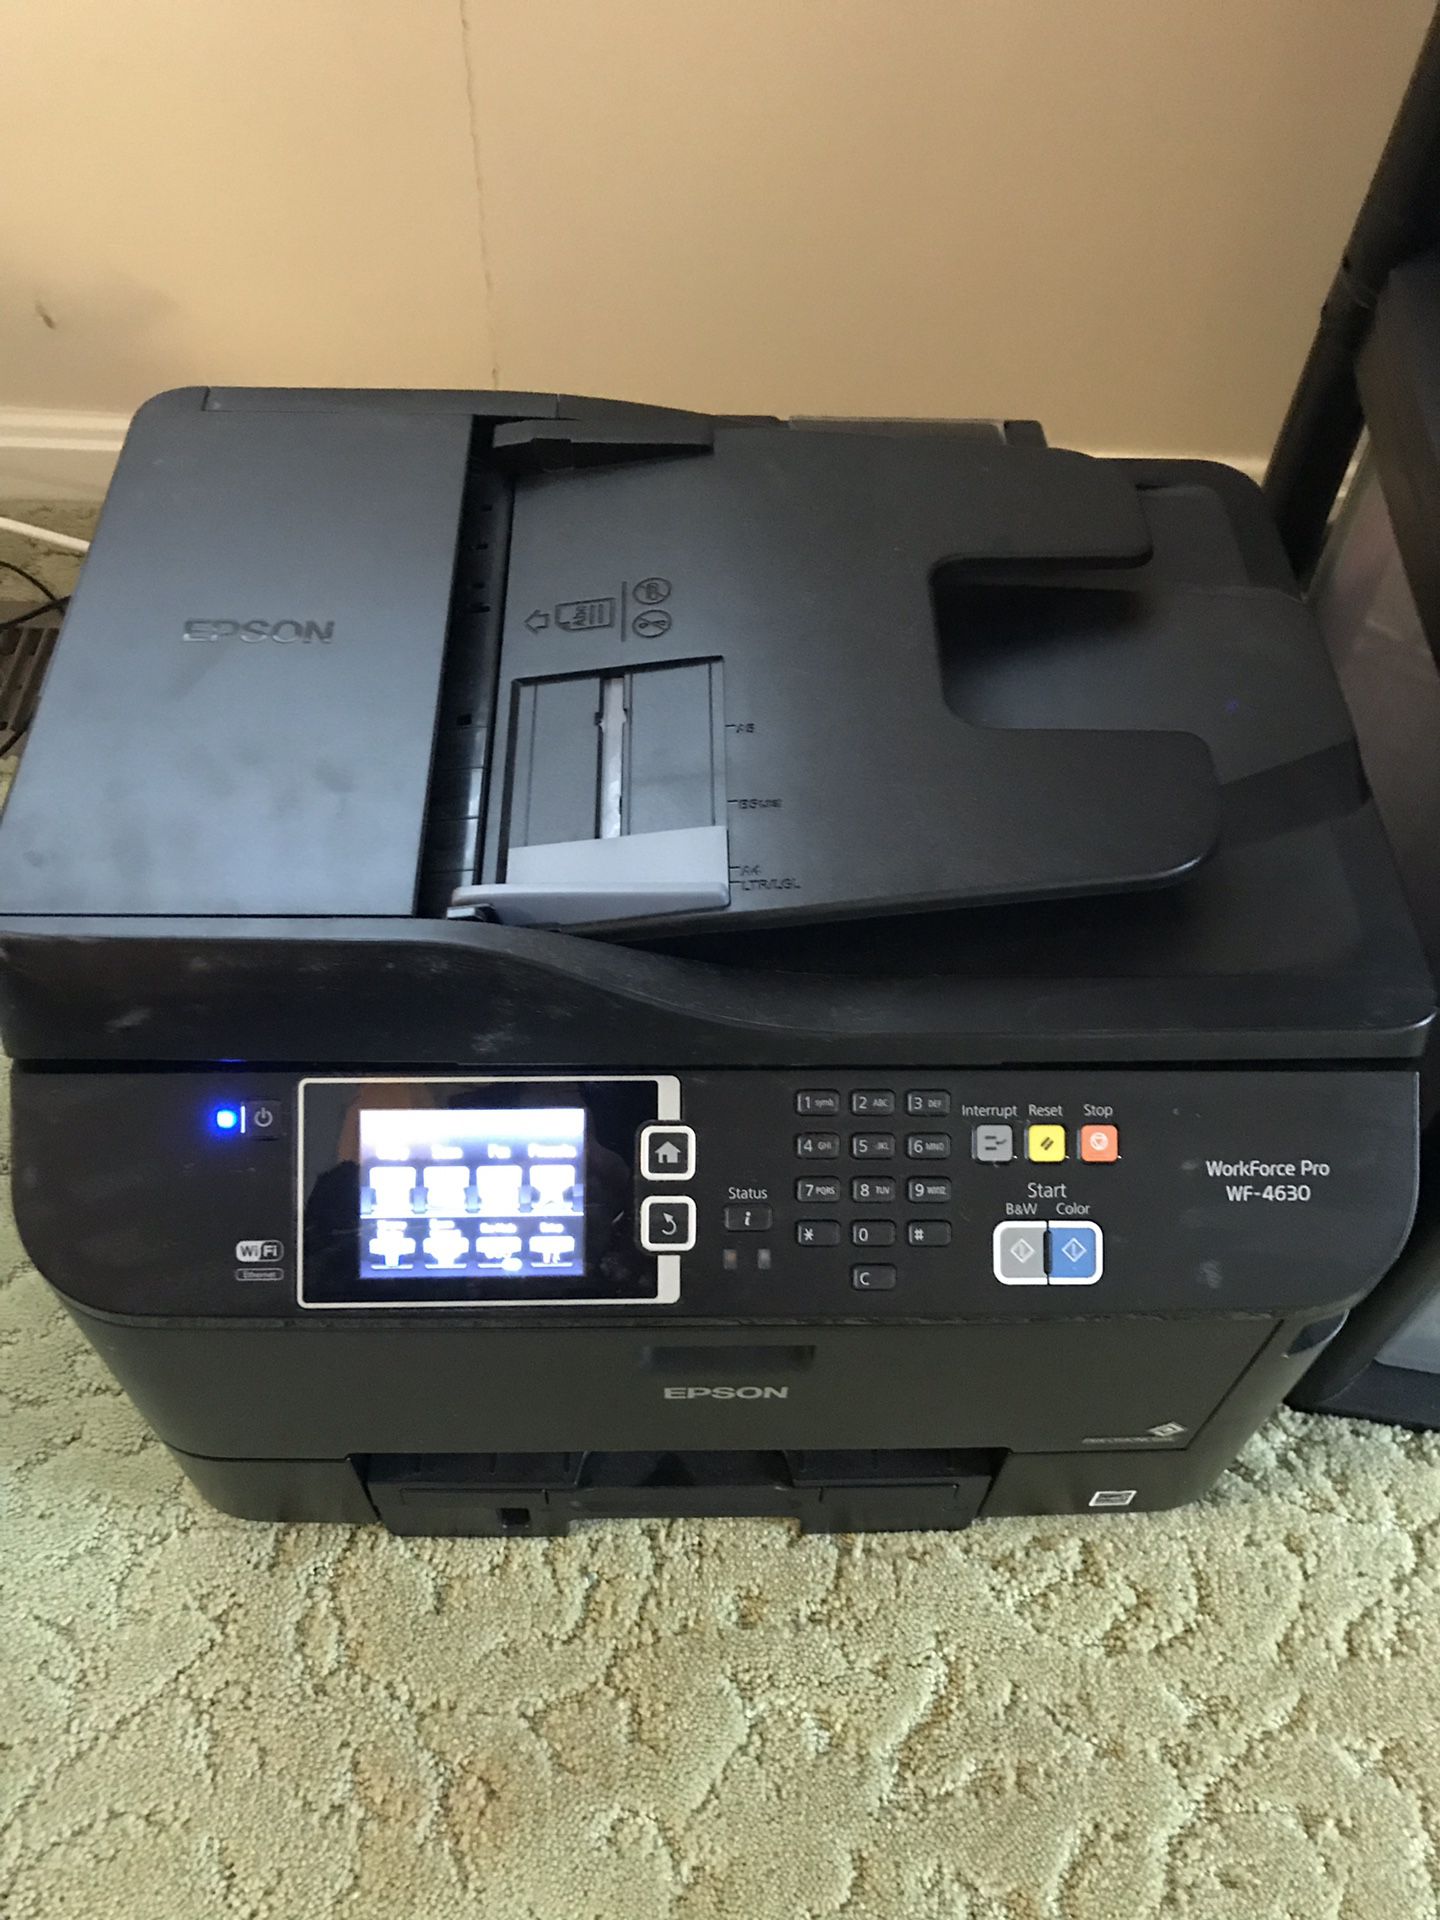 Epson Workforce Pro WF 4630 all in one printer